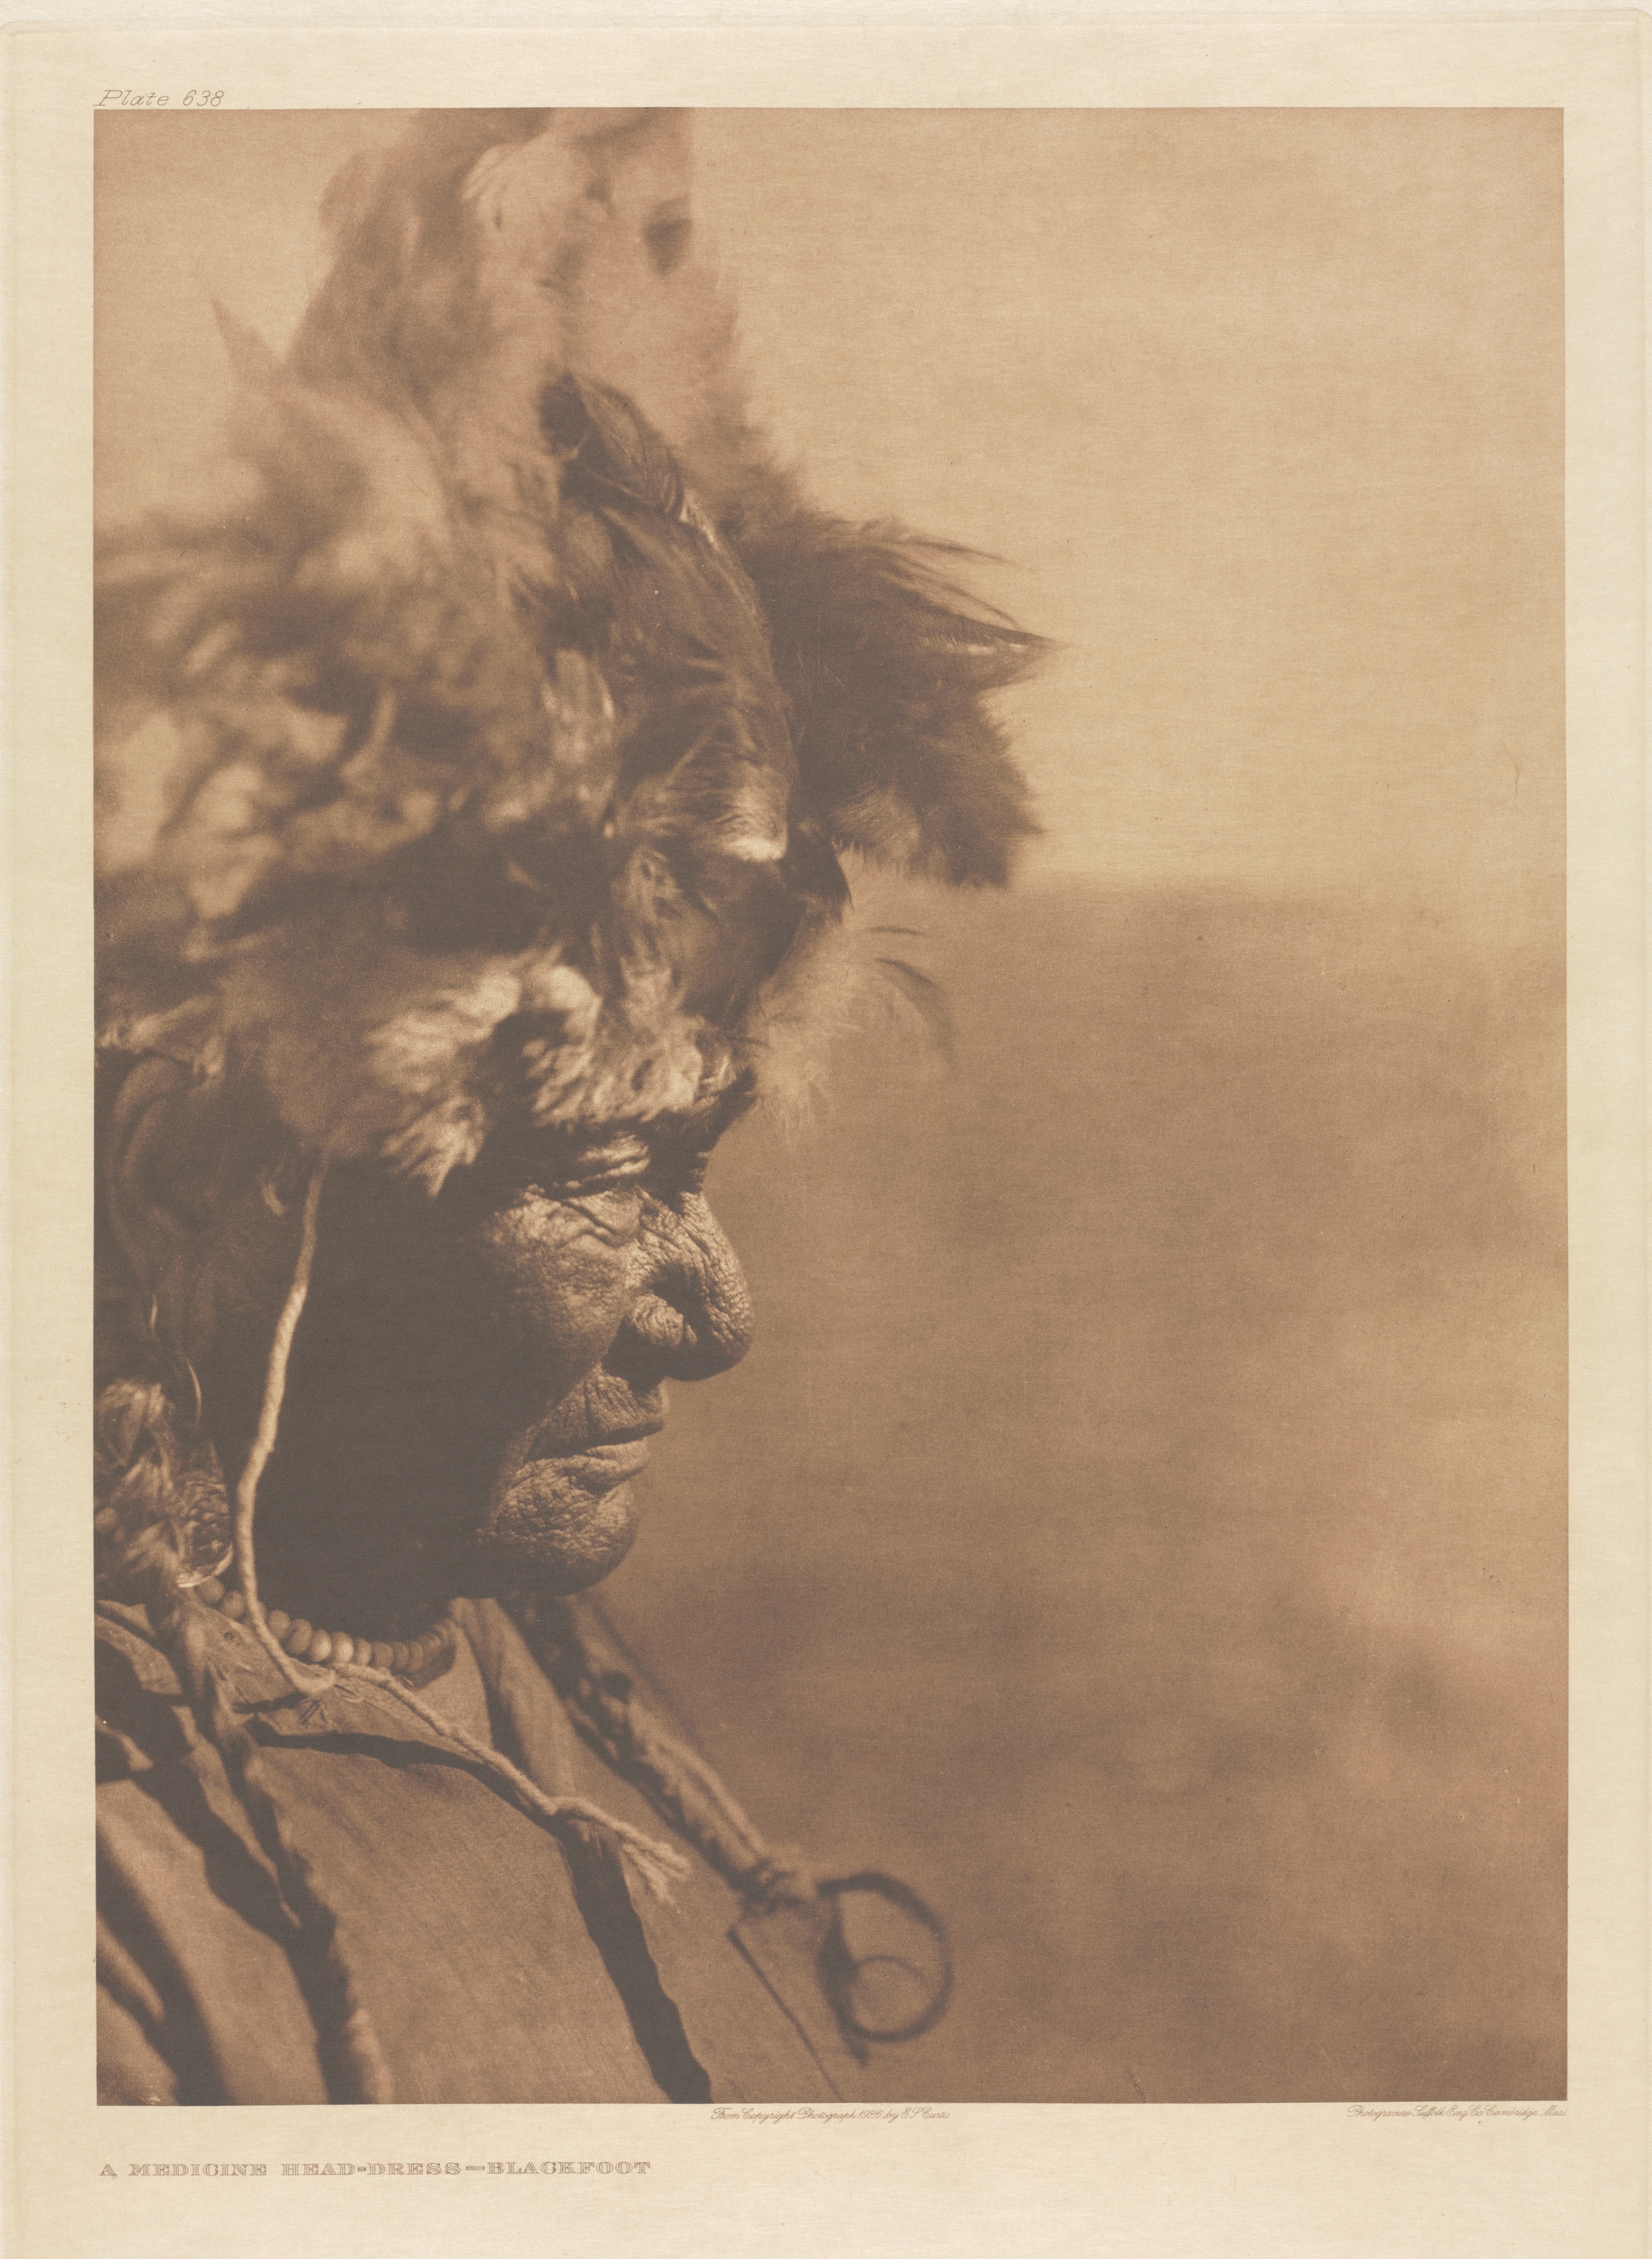 Portfolio XVIII, Plate 638: A Medicine Head-Dress - Blackfoot